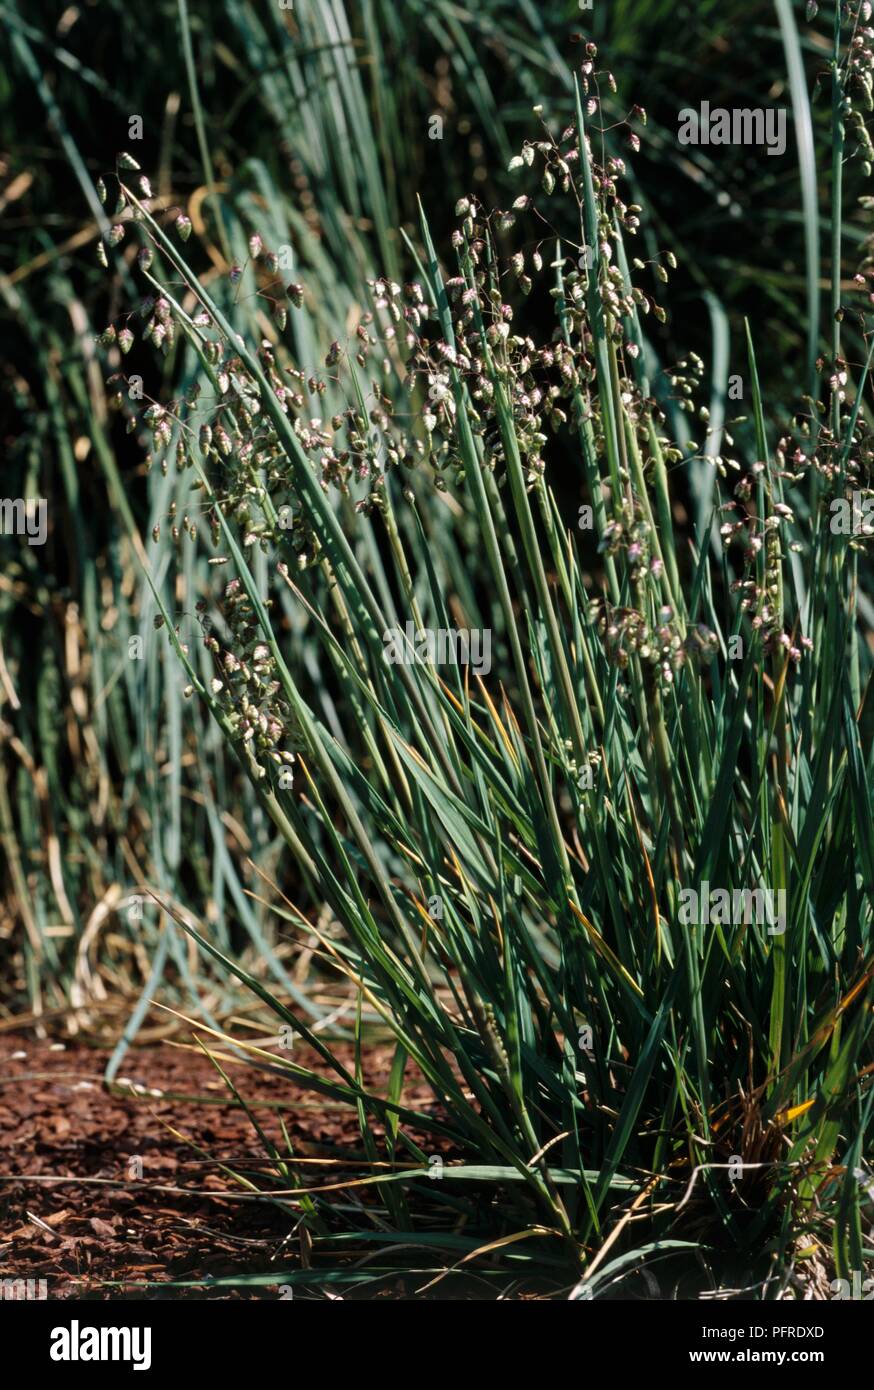 Briza media (Quaking-Grass) perennial grass on tall green stems Stock Photo